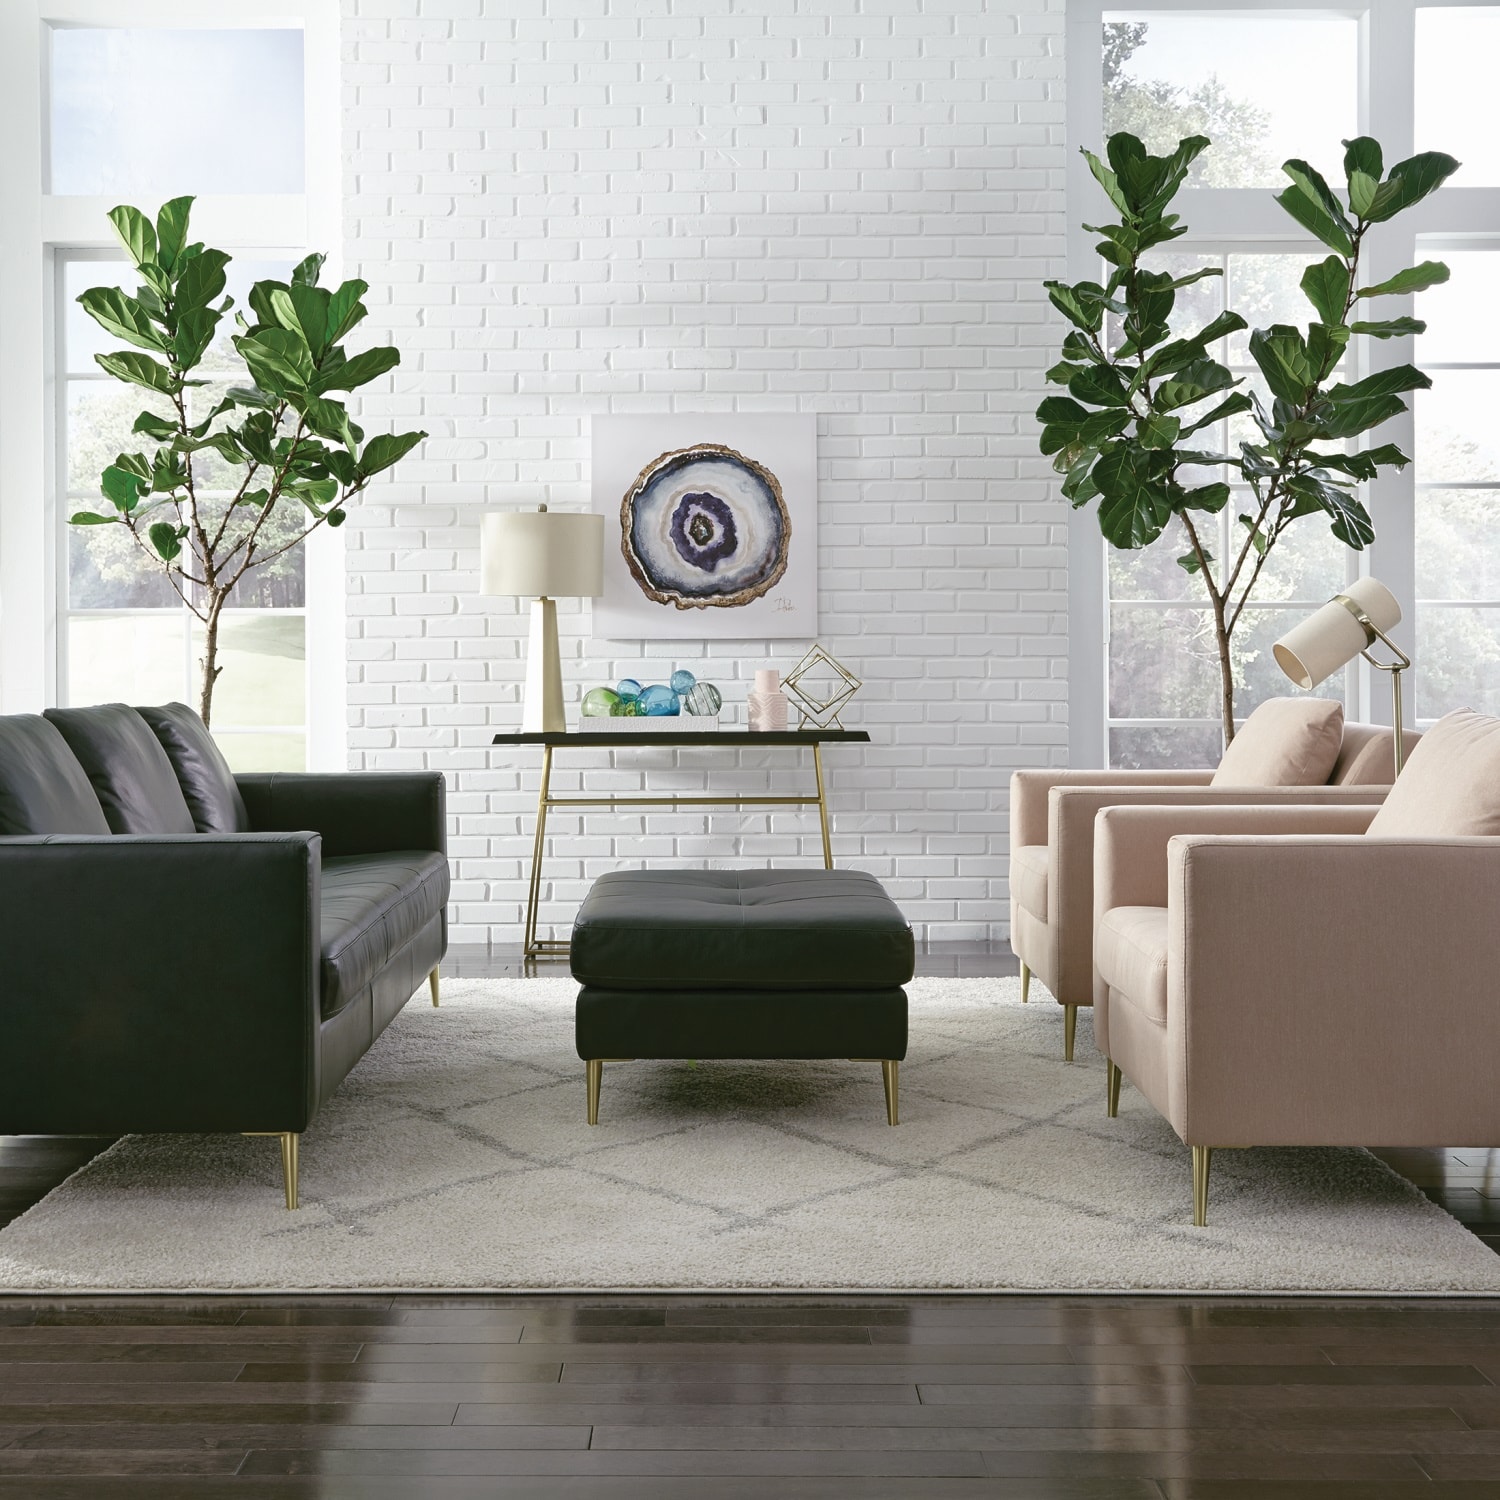 Palliser Sofa, Chairs and Ottoman with Plants